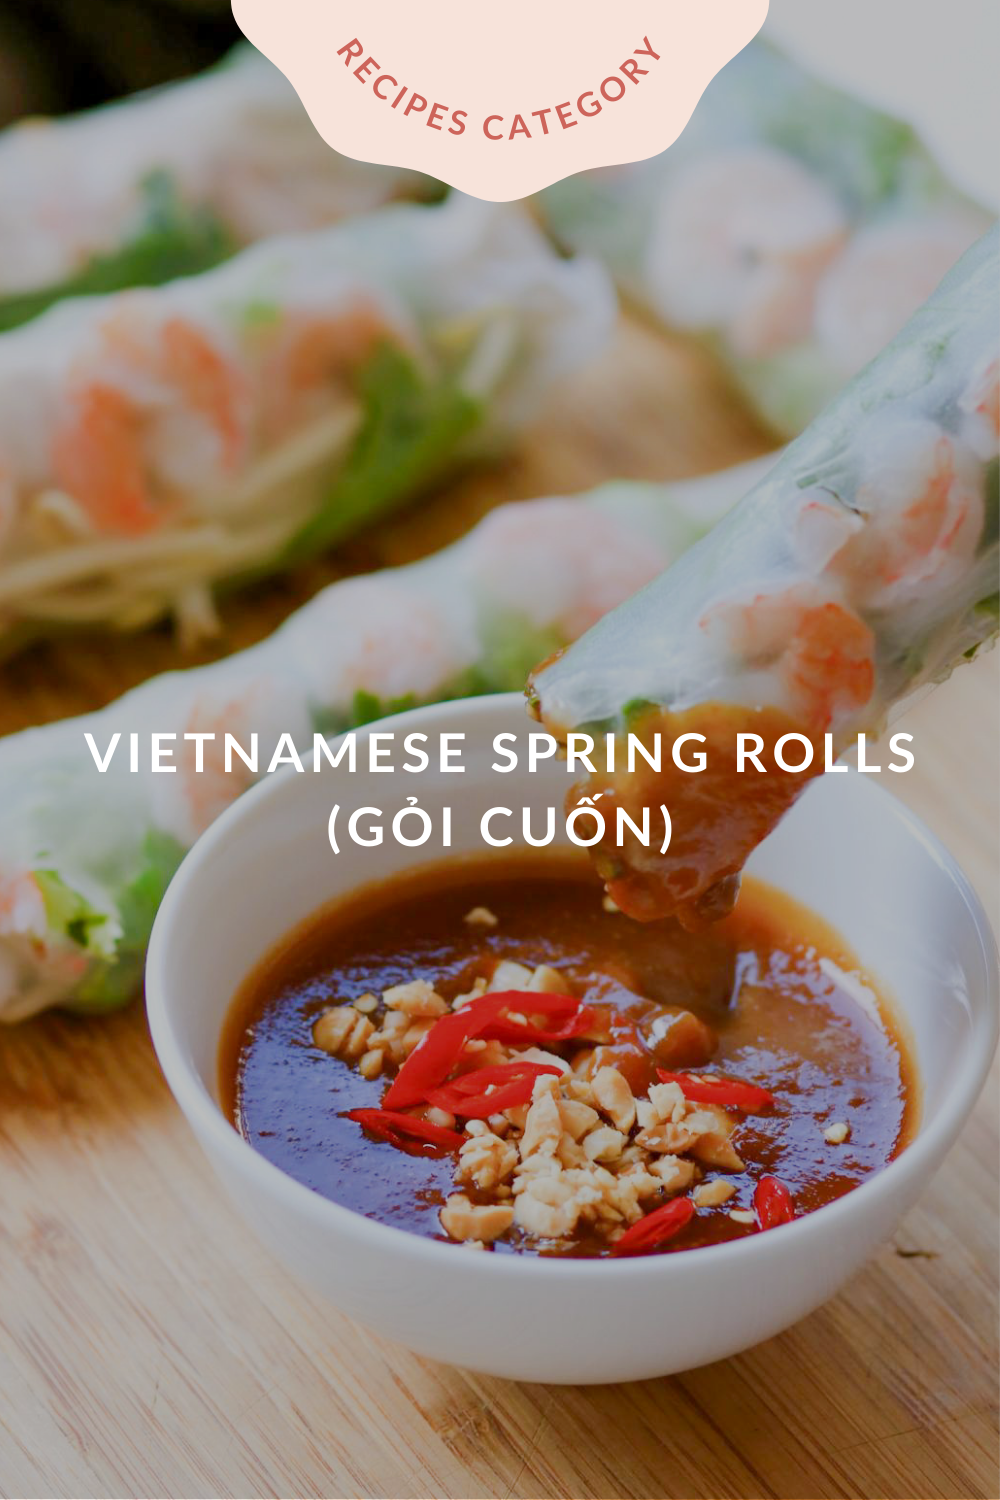 Vietnamese Spring Rolls Recipe (Gỏi Cuốn) — Trista Chan RD, MHSc